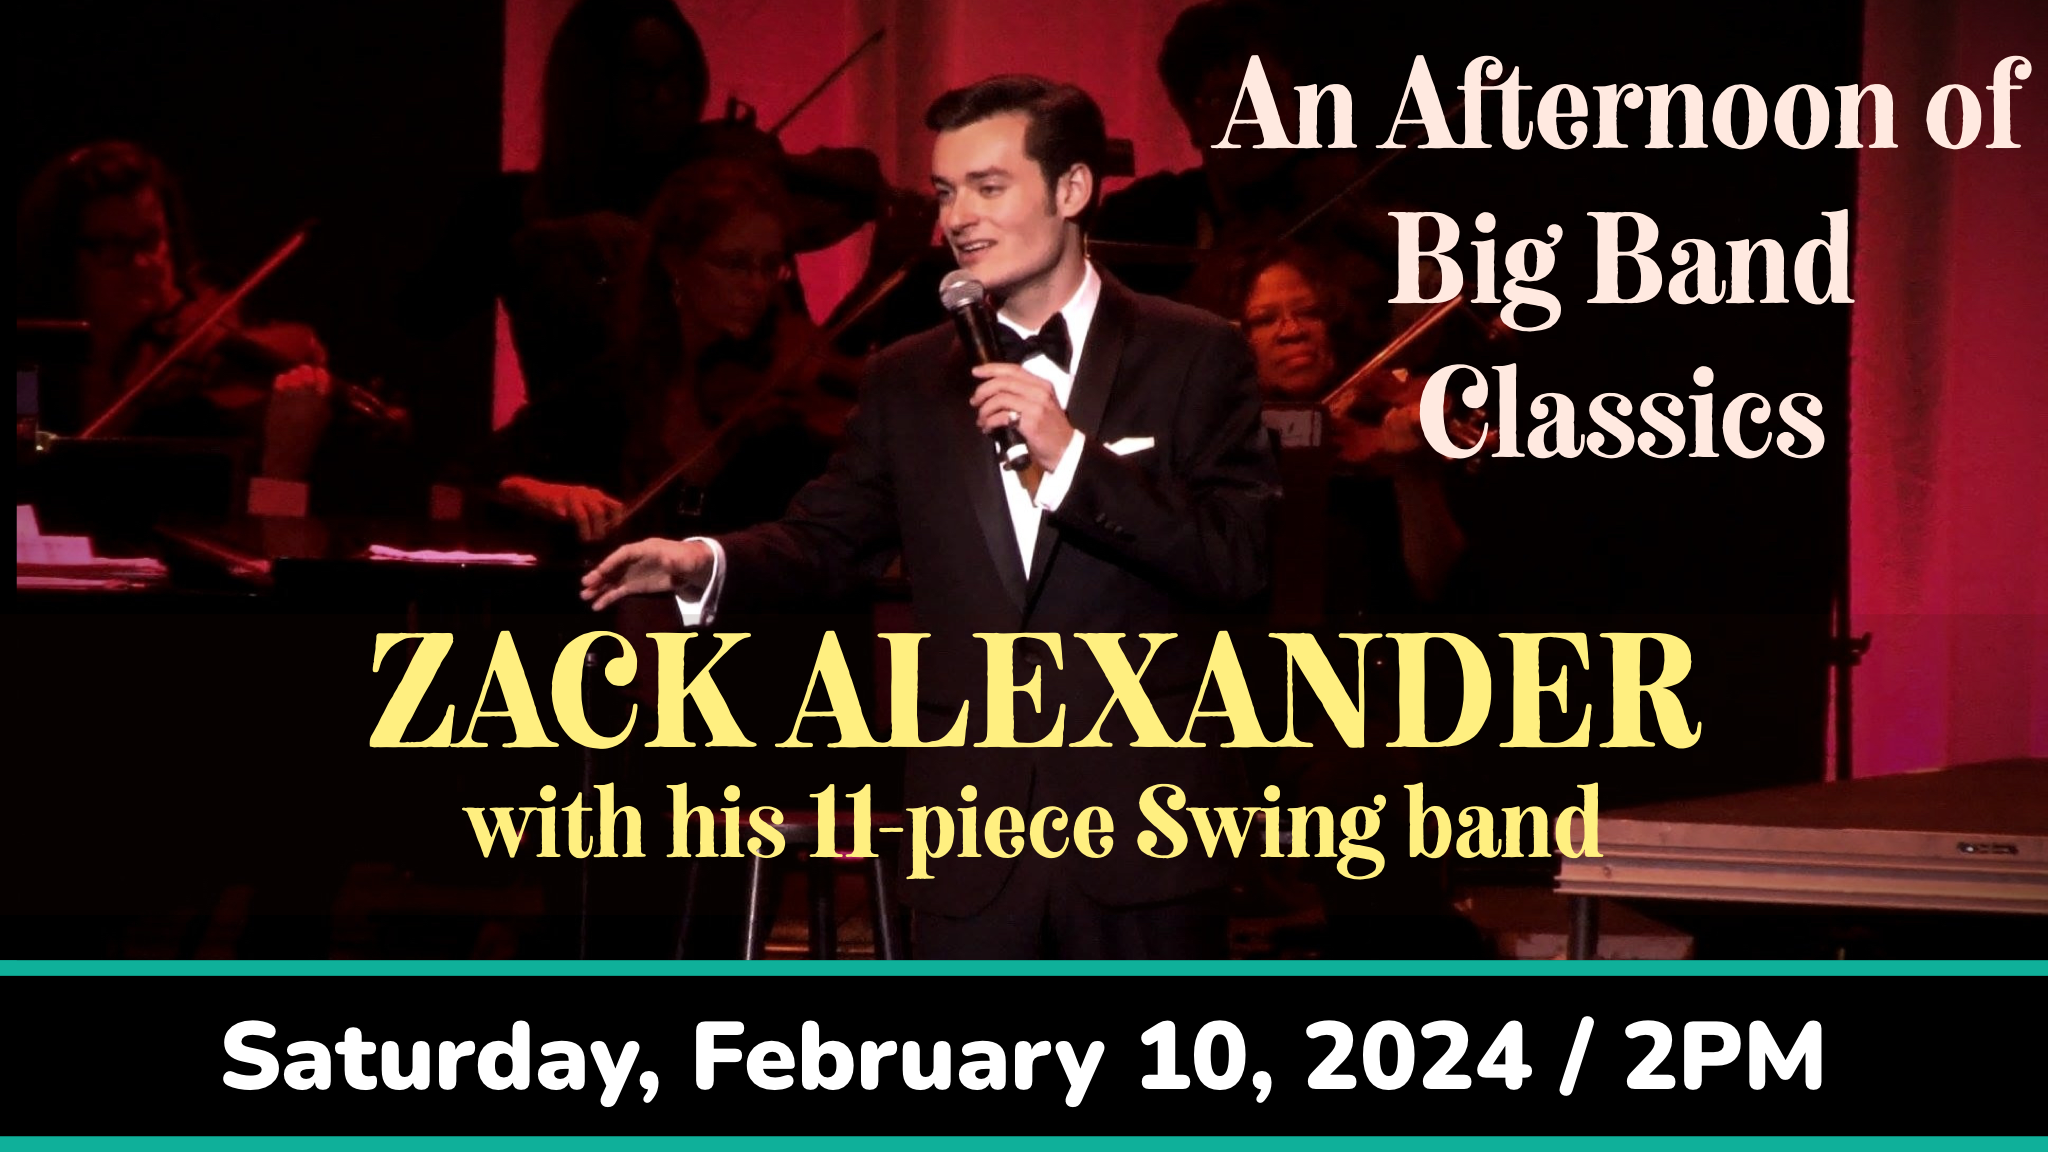 Zack Alexander: An Afternoon of Big Band Classics